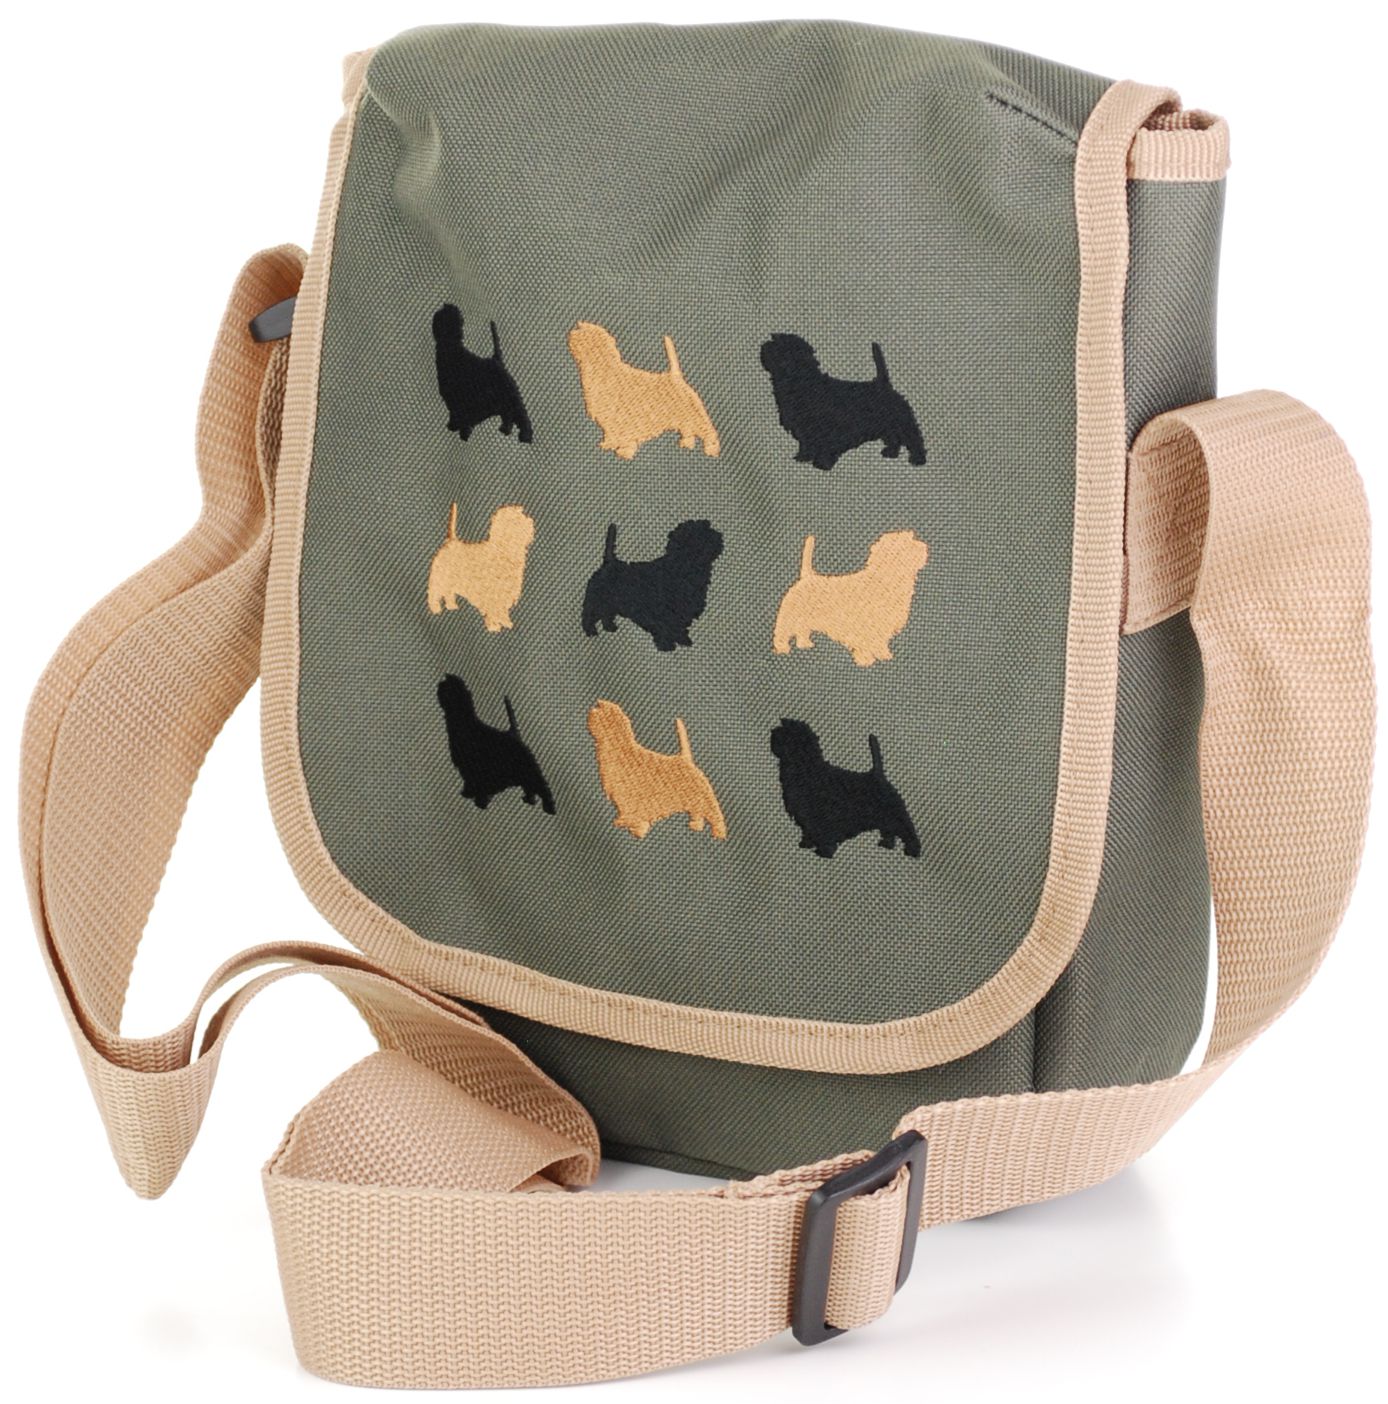 Norfolk Terrier embroidered cross body bag